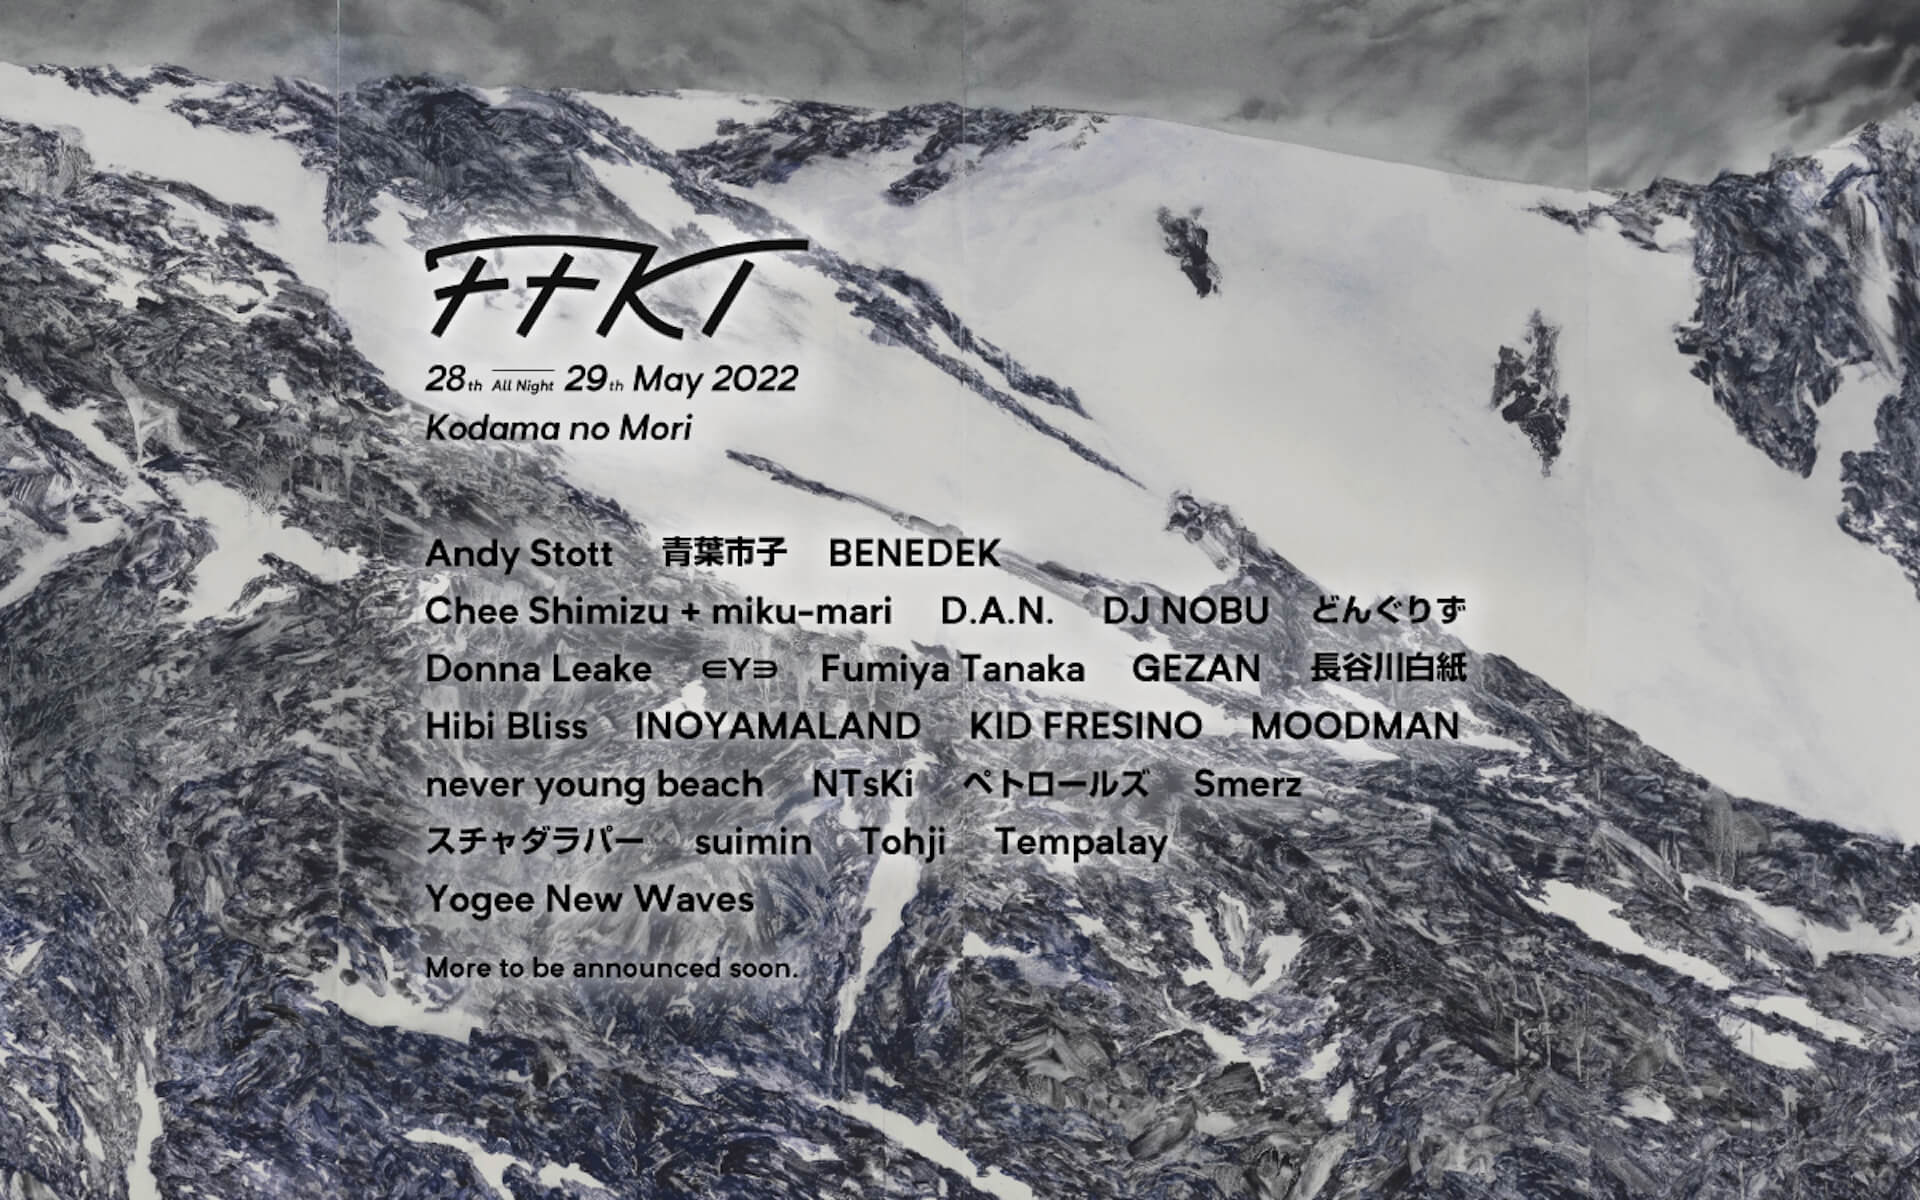 【FFKT 2022第1弾出演者】国内外から25組が発表｜Andy Stott、Smerz、ペトロールズ、KID FRESINO、Tohjiら出演 muisic22040-5_ffkt-01